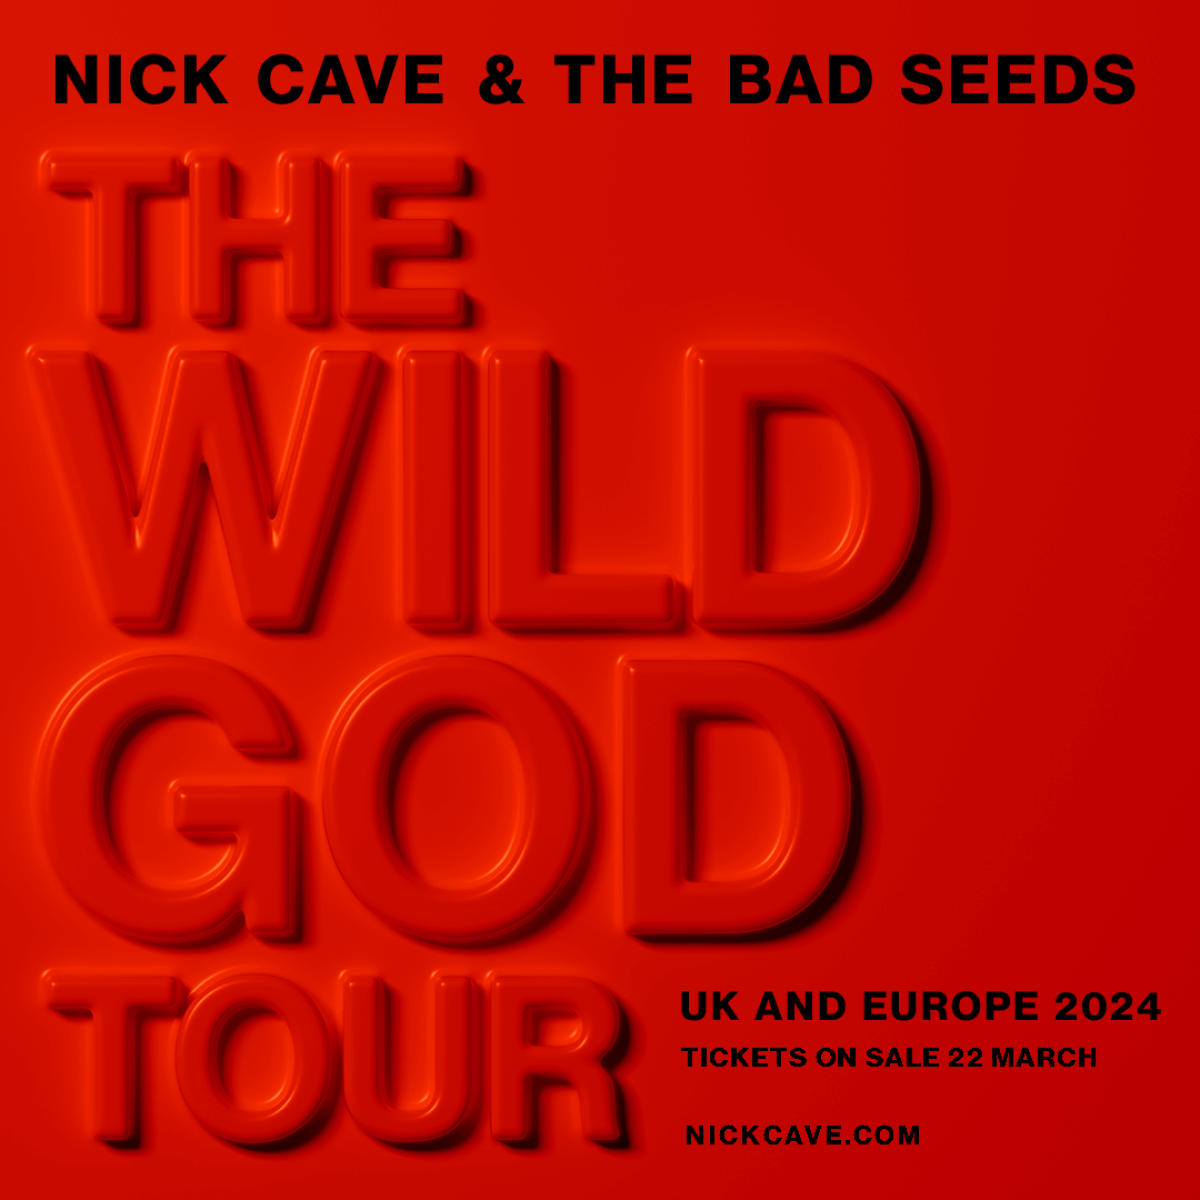 Billets Nick Cave and the Bad Seeds - The Wild God Tour (Rudolf Weber-Arena - Oberhausen)